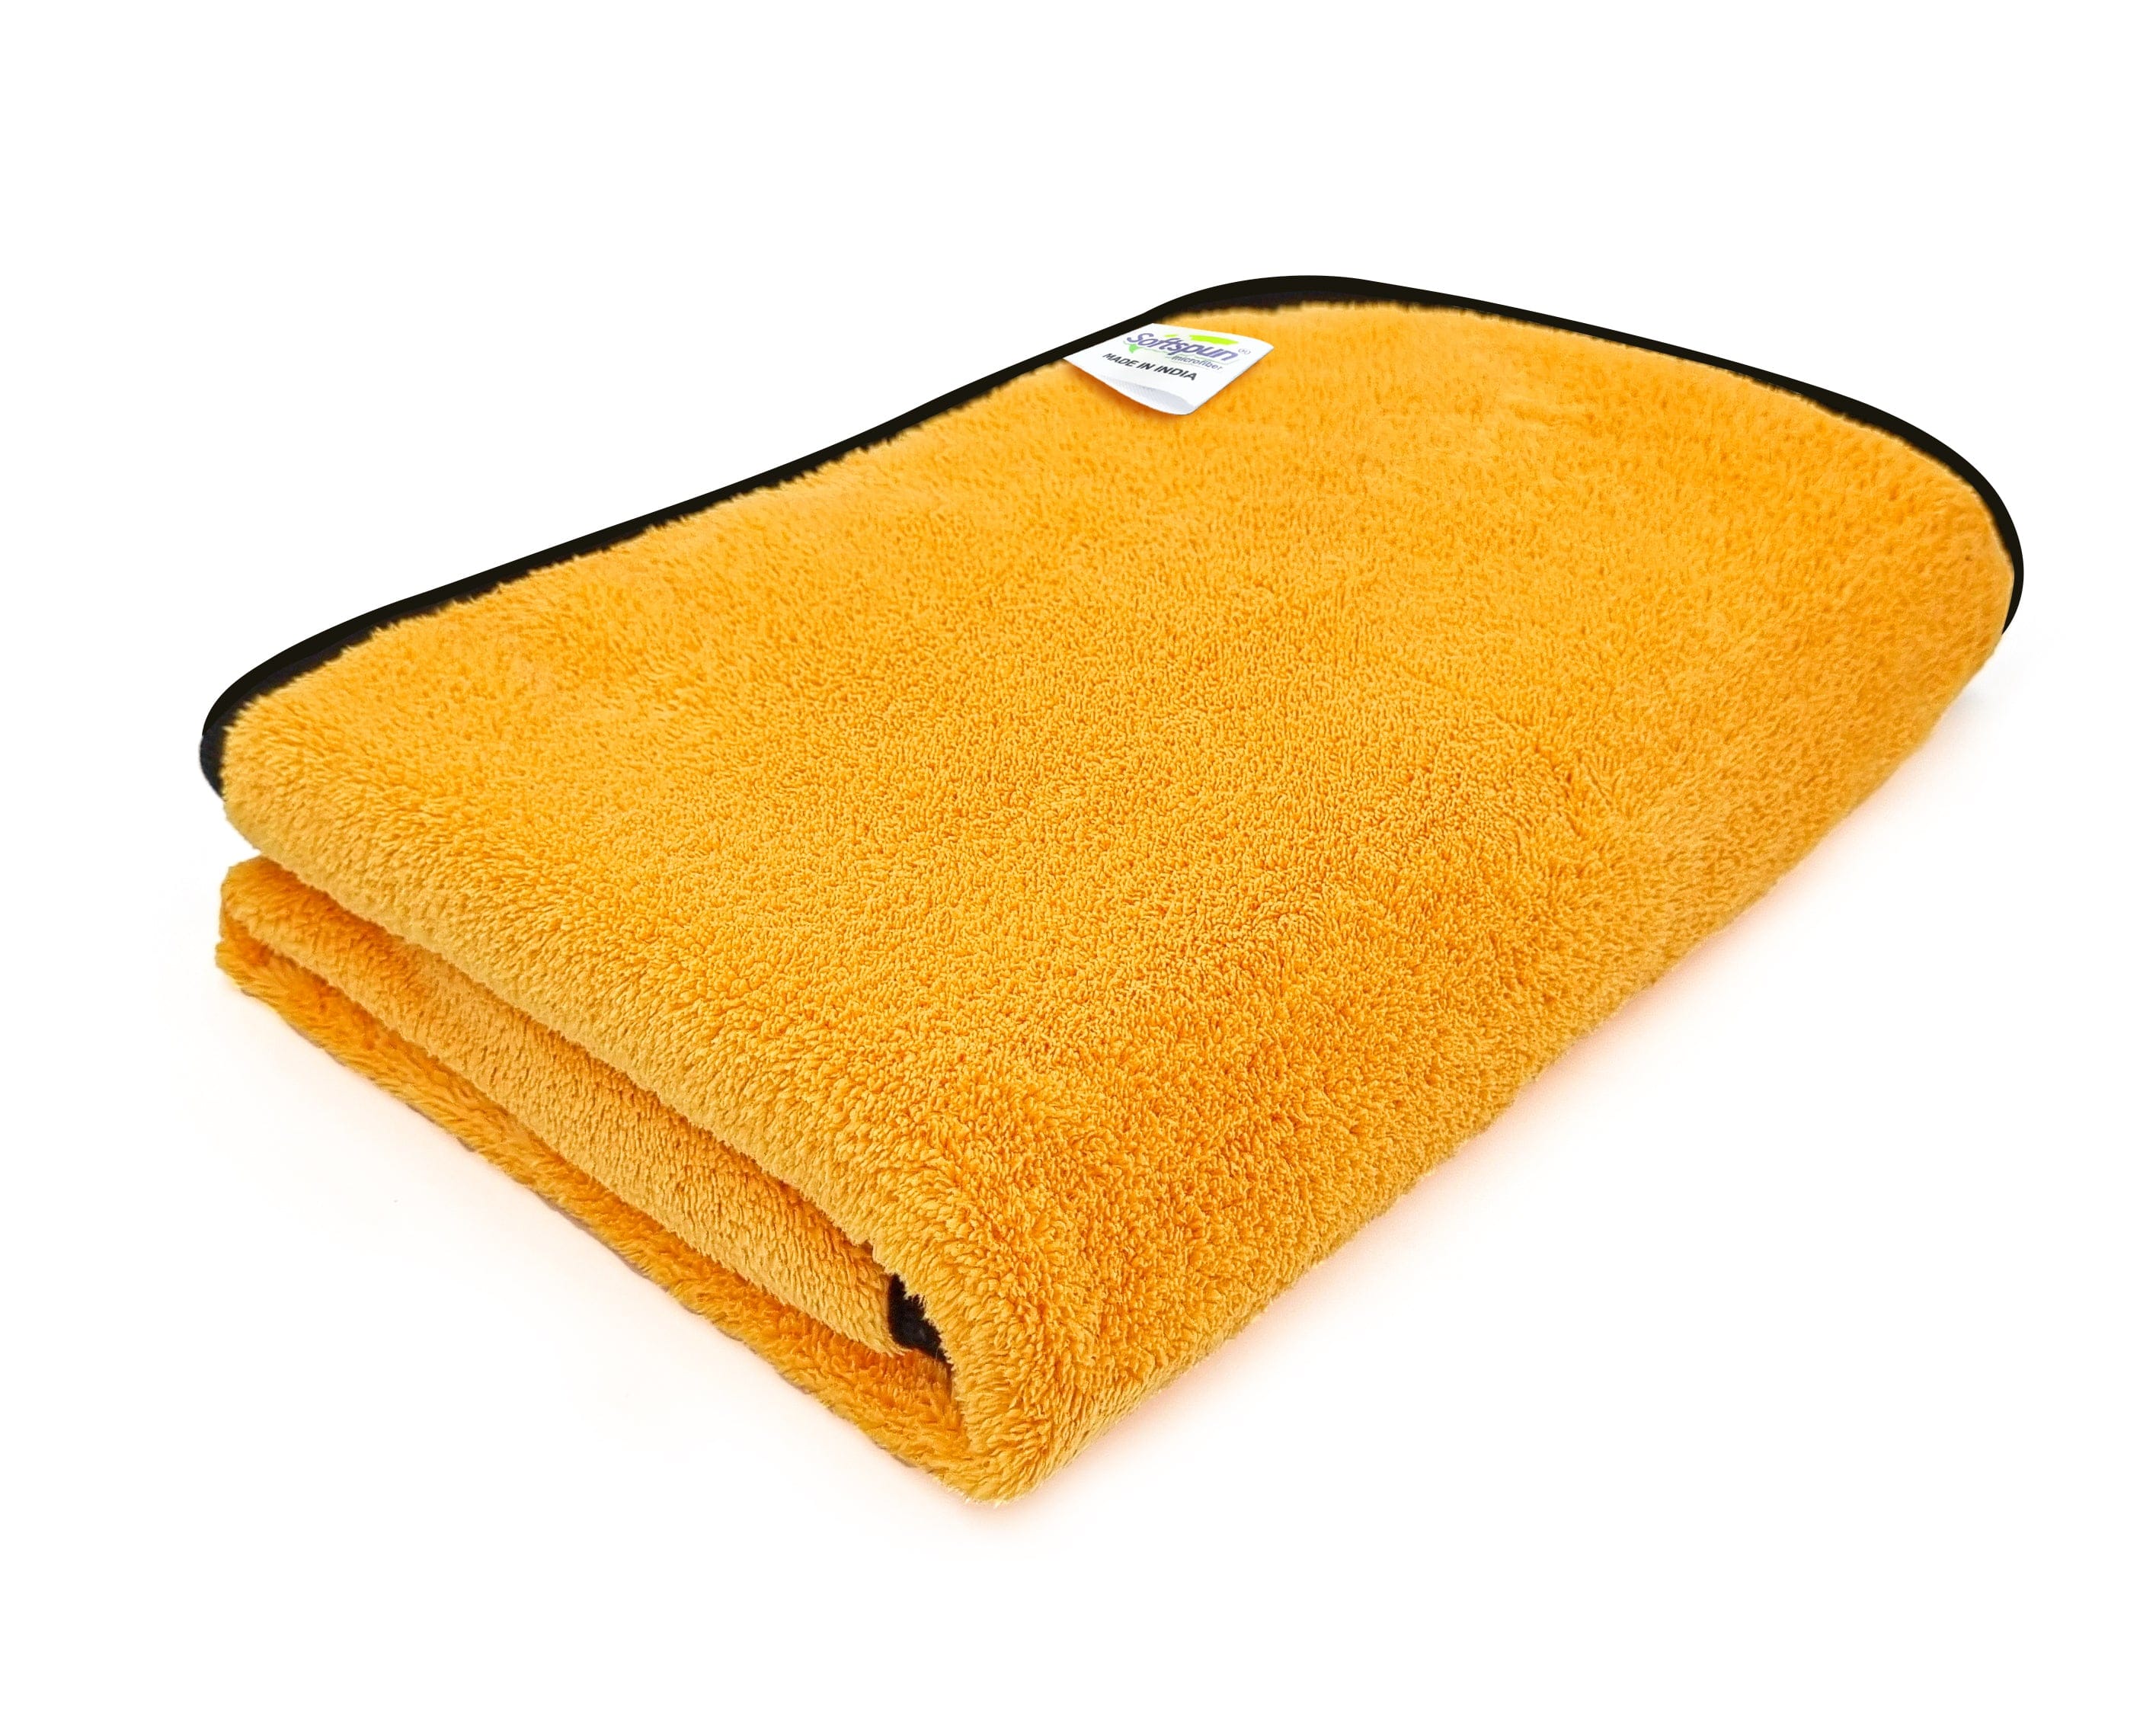 SOFTSPUN Microfiber Bath Towel 1 pc70140cm280 GSM , Ultra Absorbent Su